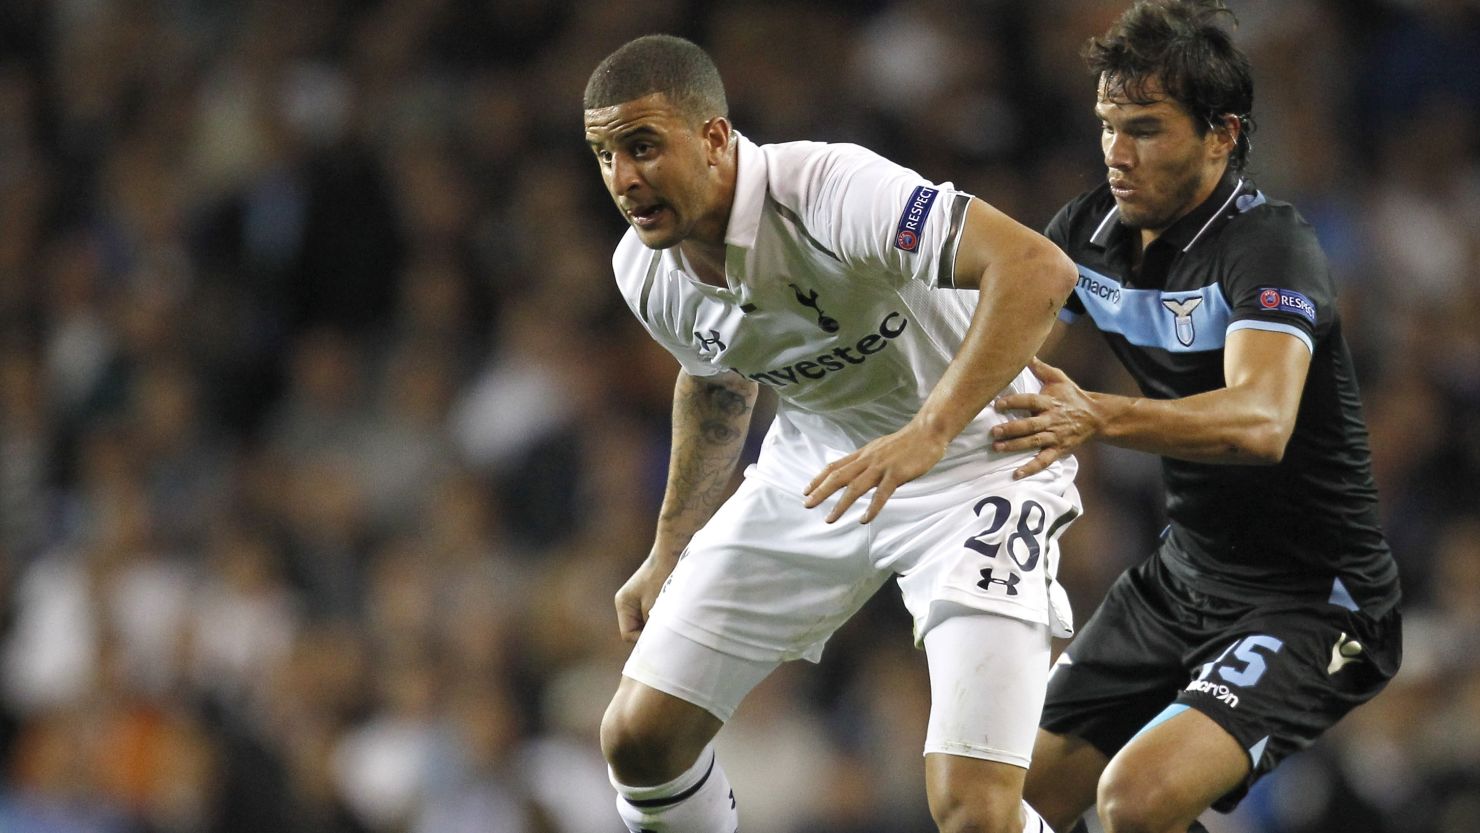 Tottenham's Kyle Walker in action against Lazio's Alvaro Gonzalez during the 0-0 Europa League draw at White Hart Lane.